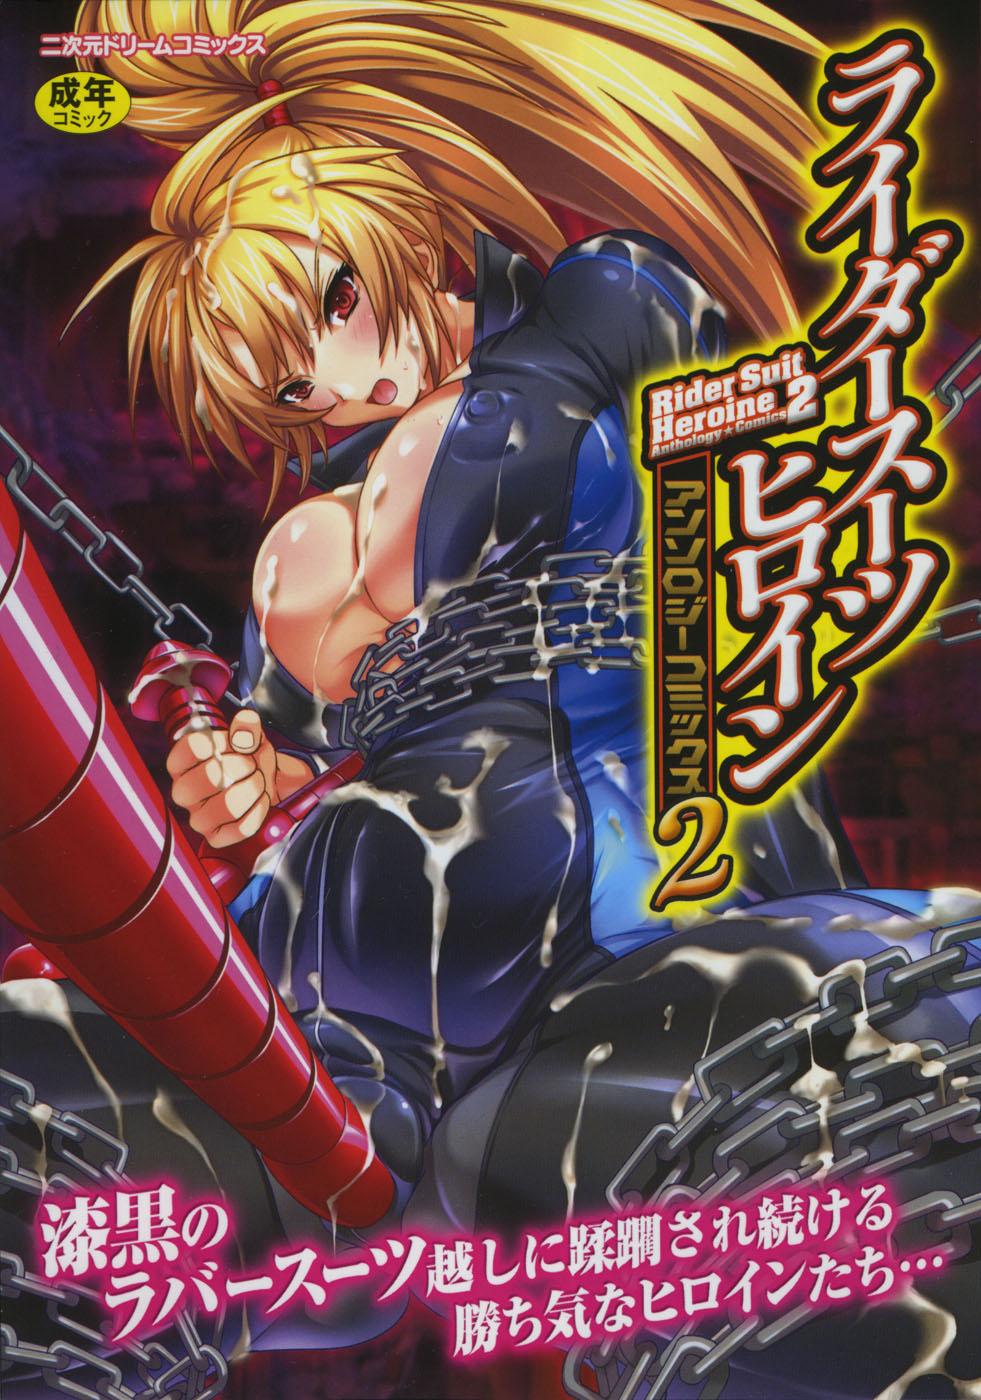 Rider Suit Heroine Anthology Comics 2 0